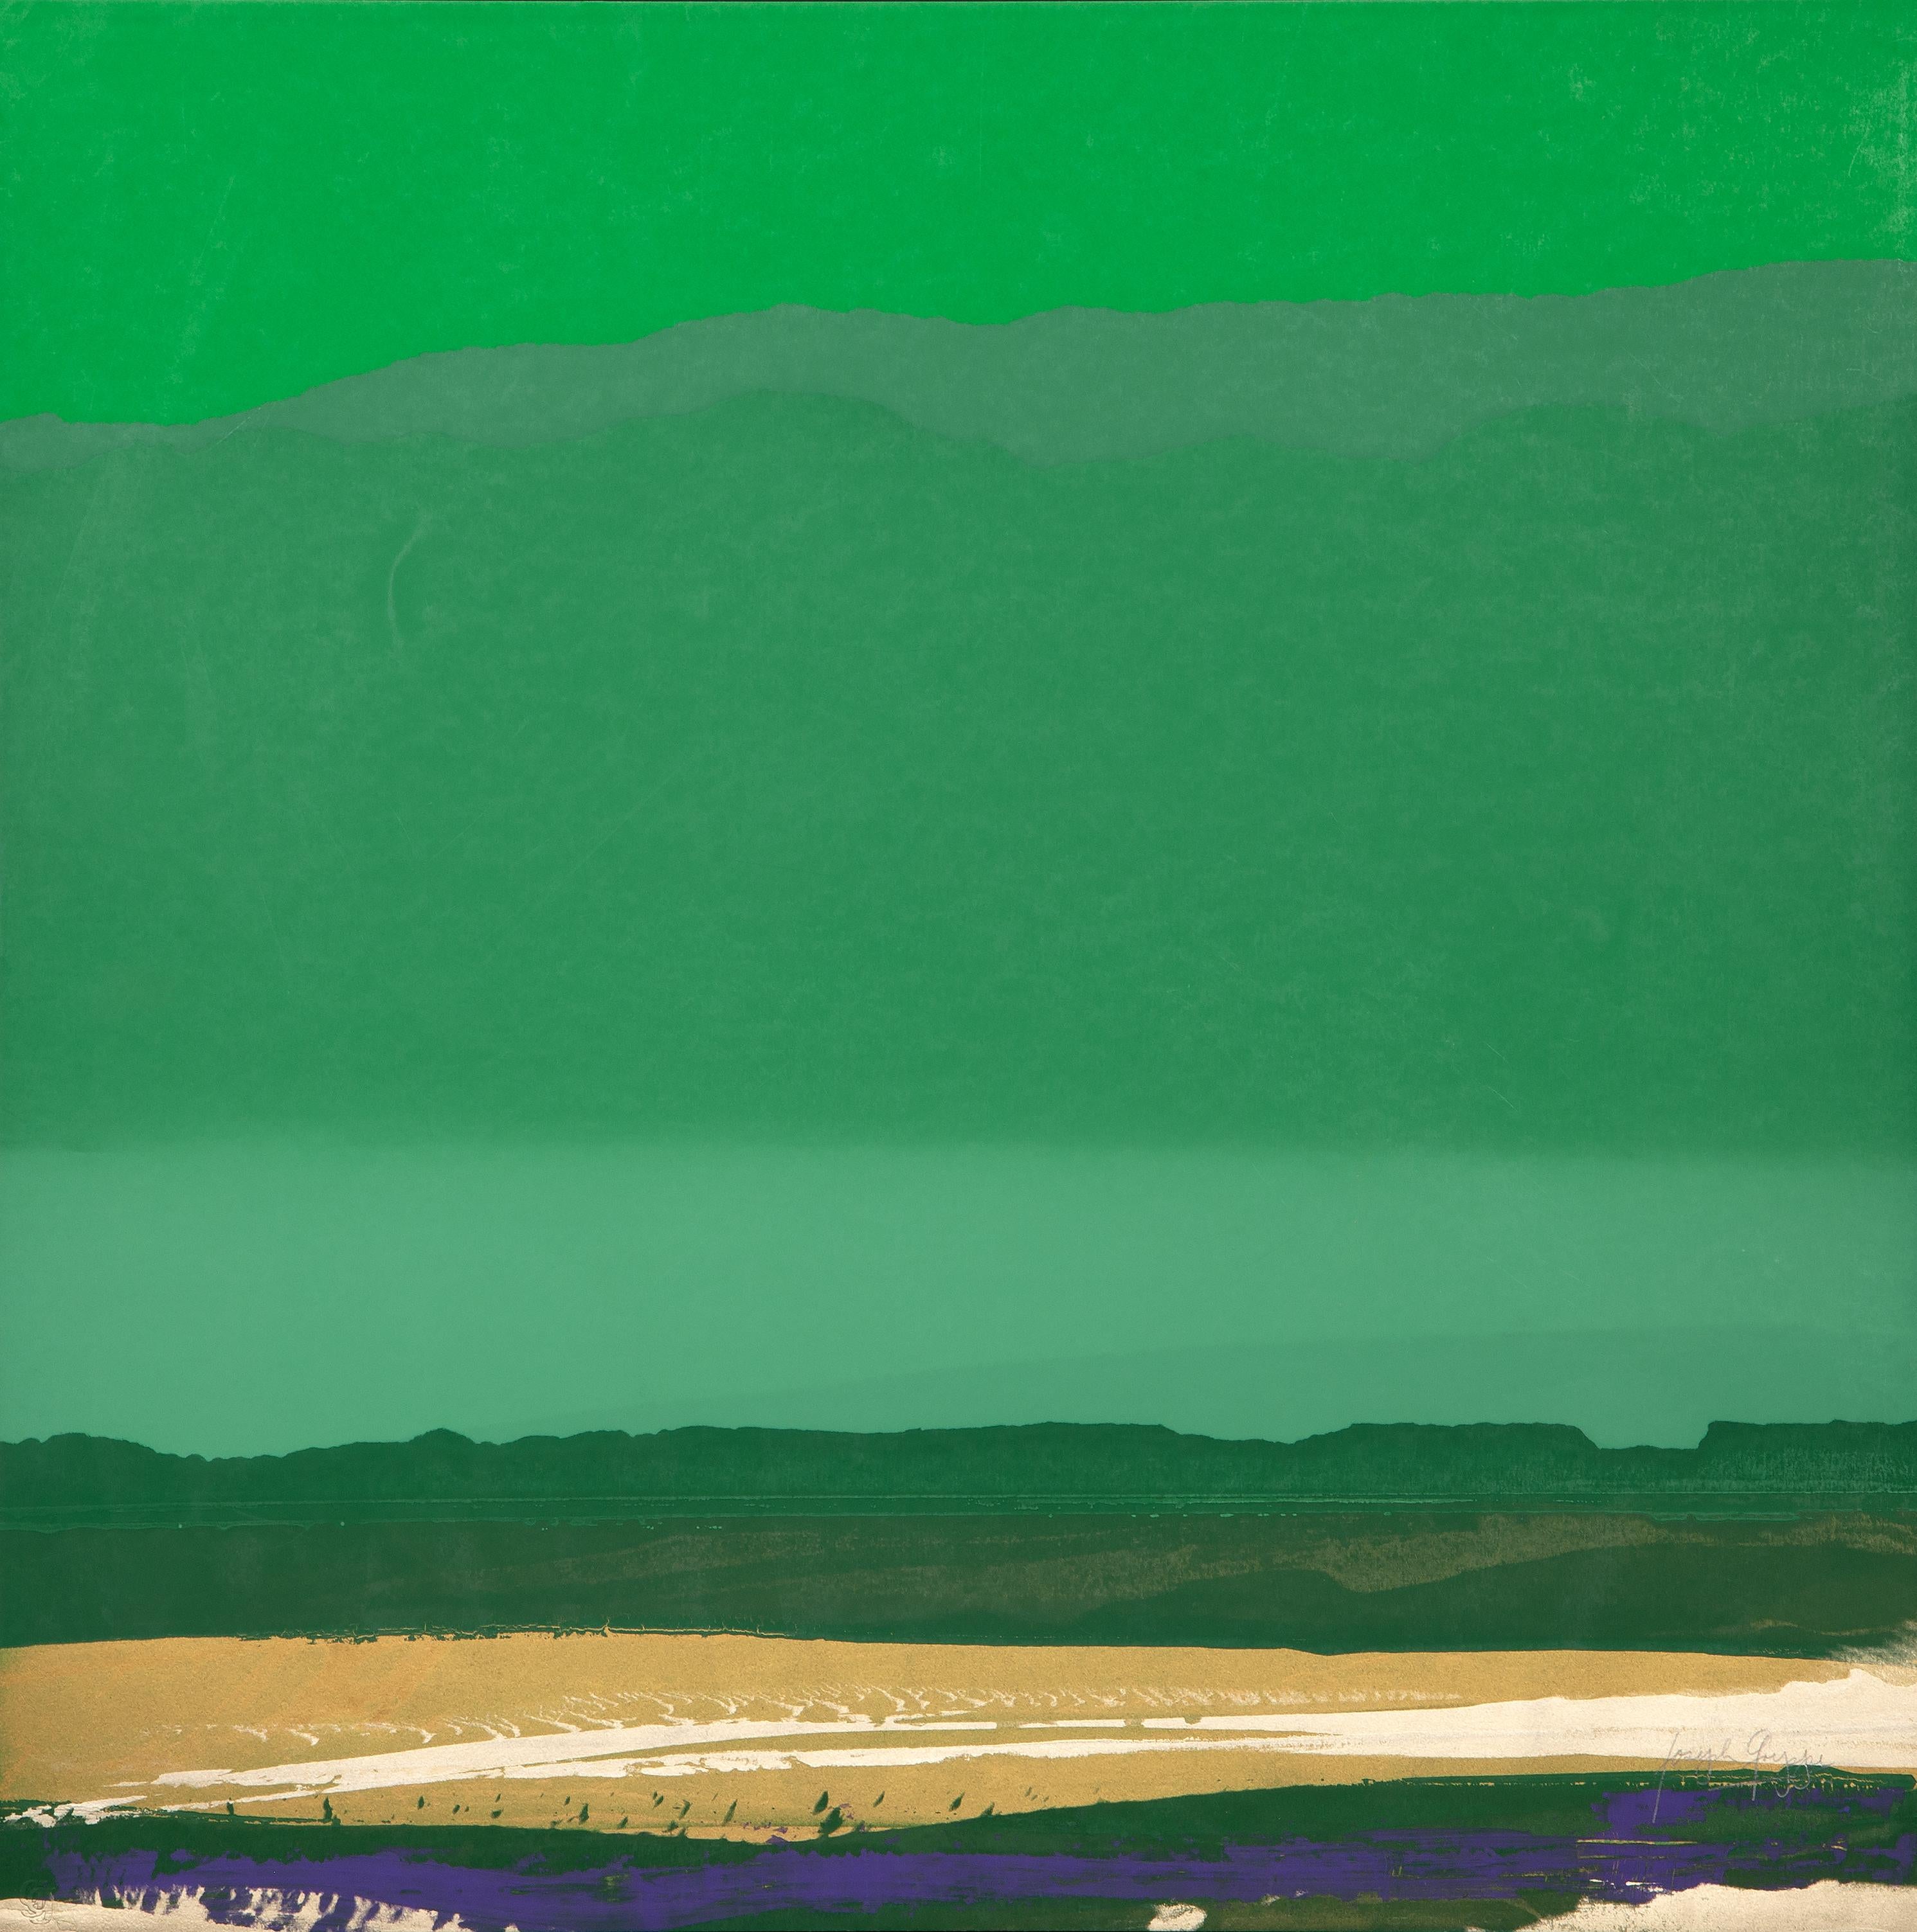 Green, Gold, Blue Landscape - Abstract Screenprint Monoprint by Joseph Grippi